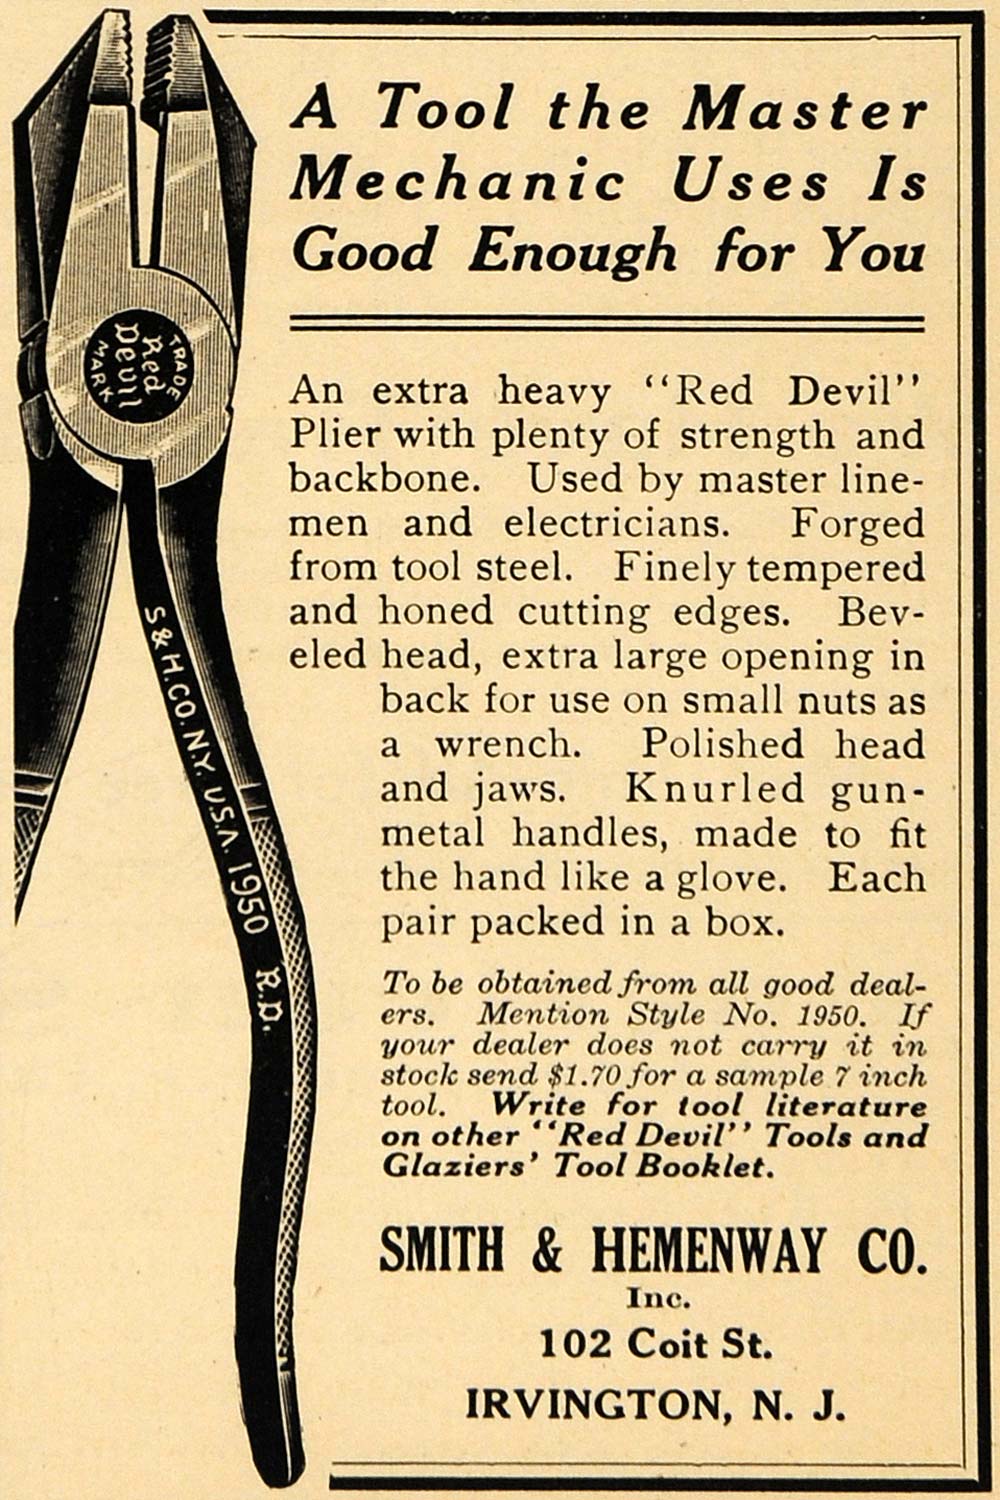 1917 Ad Smith & Hemenway Co. Red Devil Plier Tools - ORIGINAL ADVERTISING ILW1